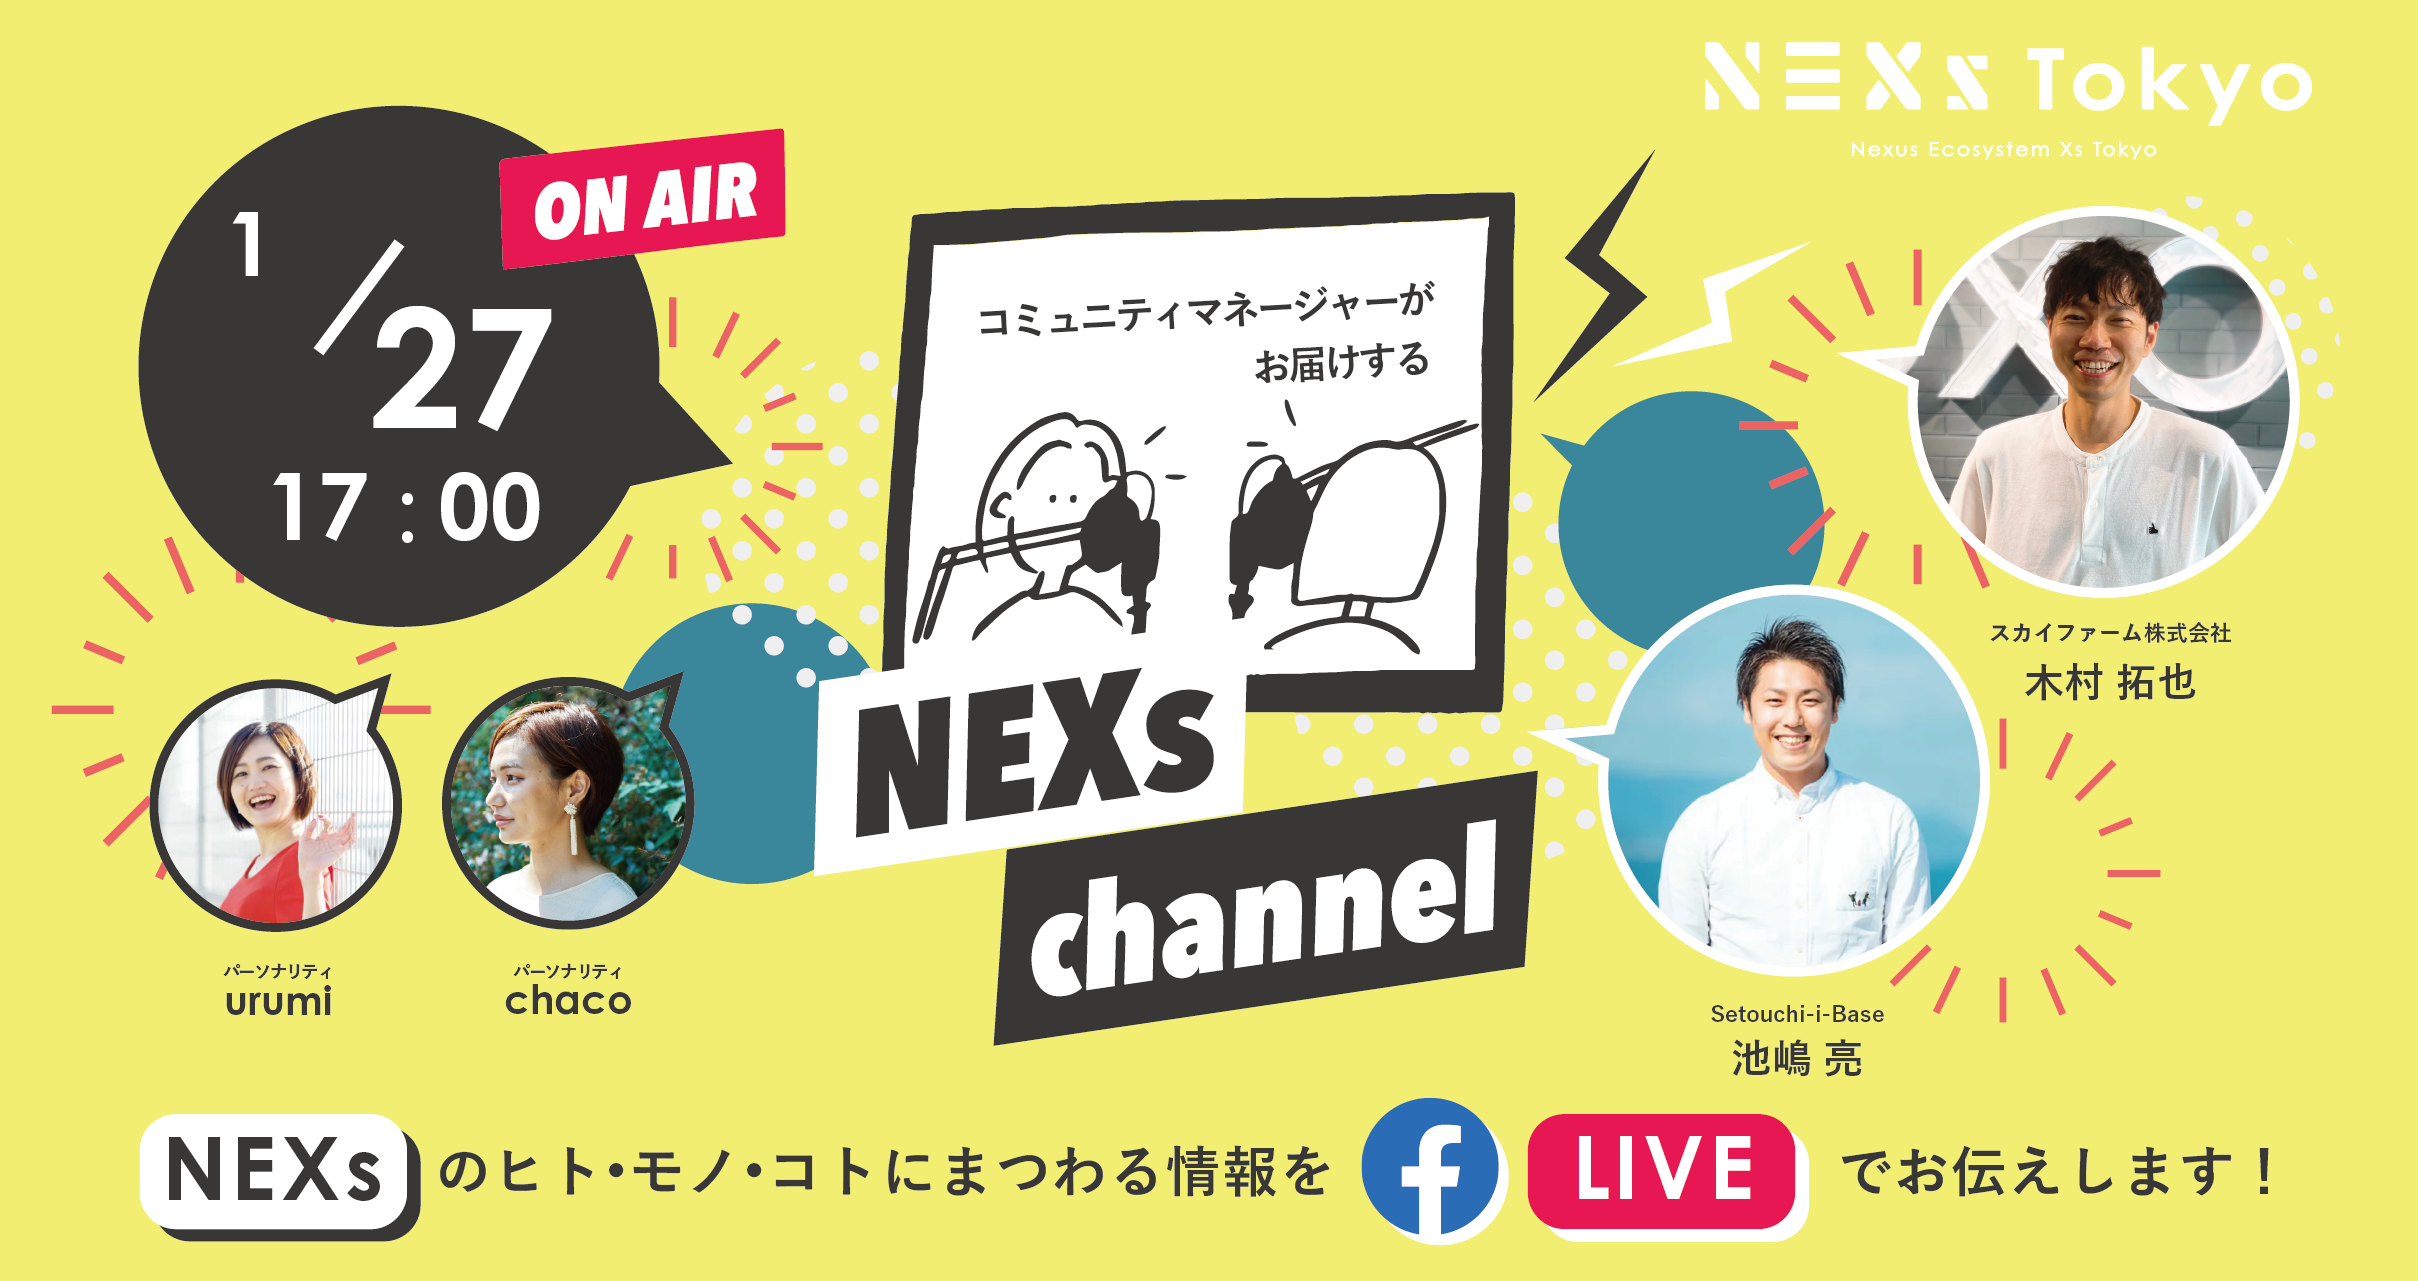 NEXs channel #13 -NEXs Tokyoのヒト・モノ・コトを特設ラジオブースから生放送でお届け！-